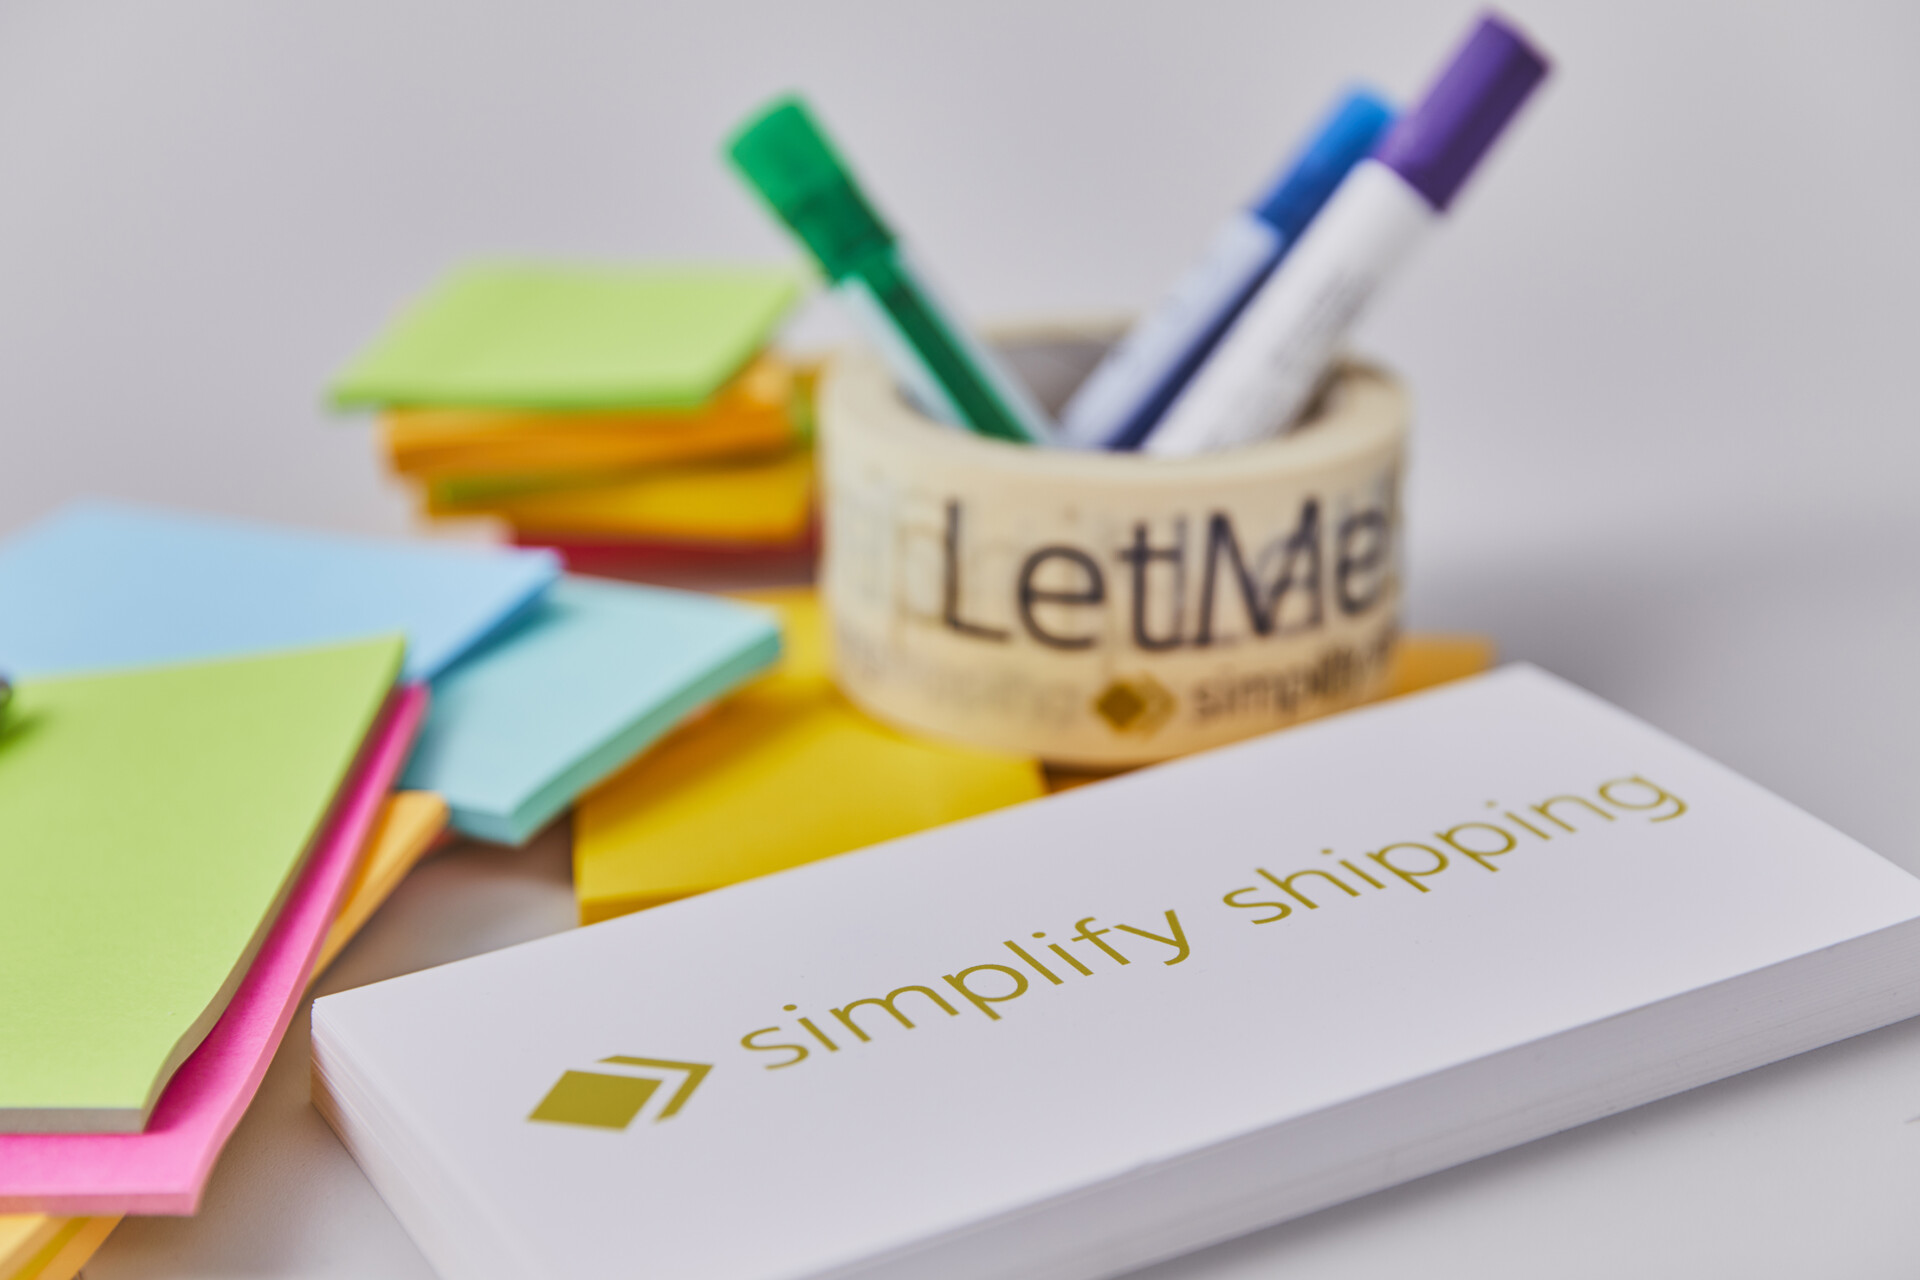 LetMeShip simplify shipping